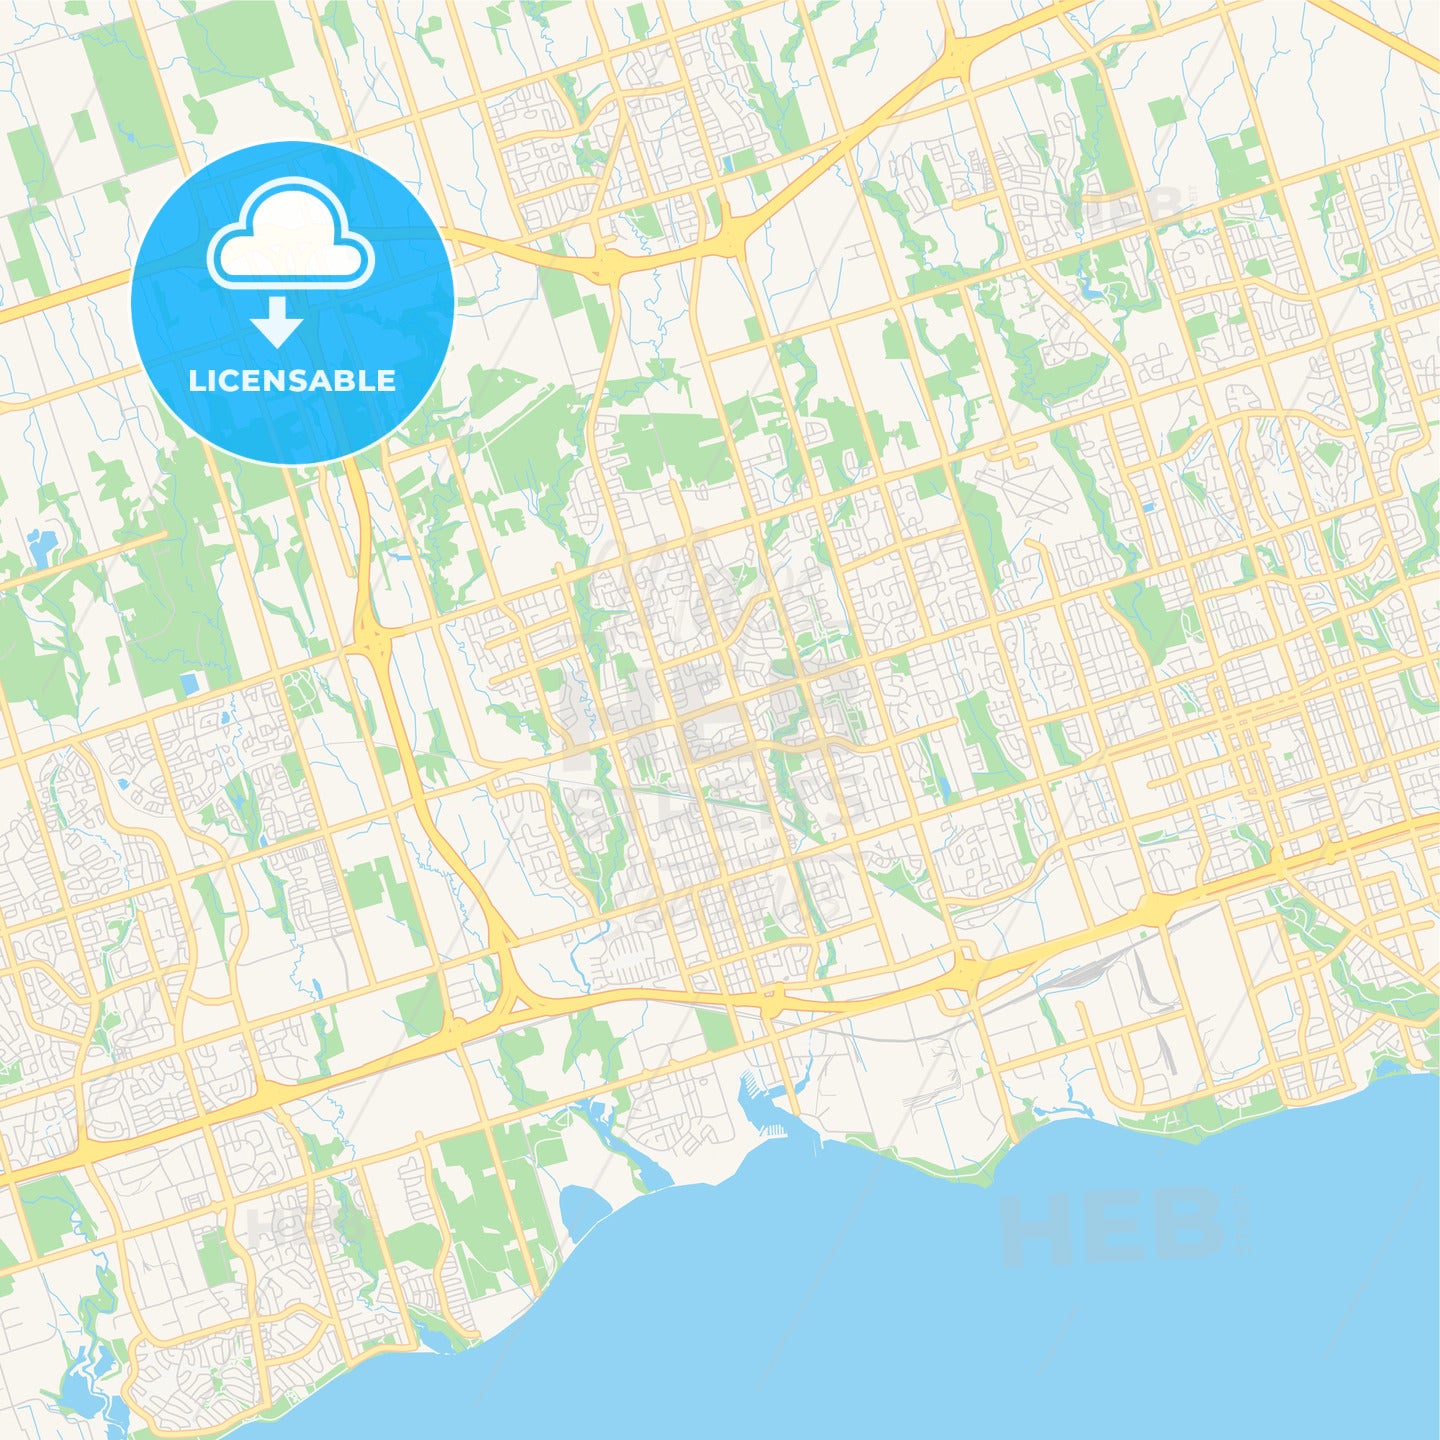 Empty vector map of Whitby, Ontario, Canada